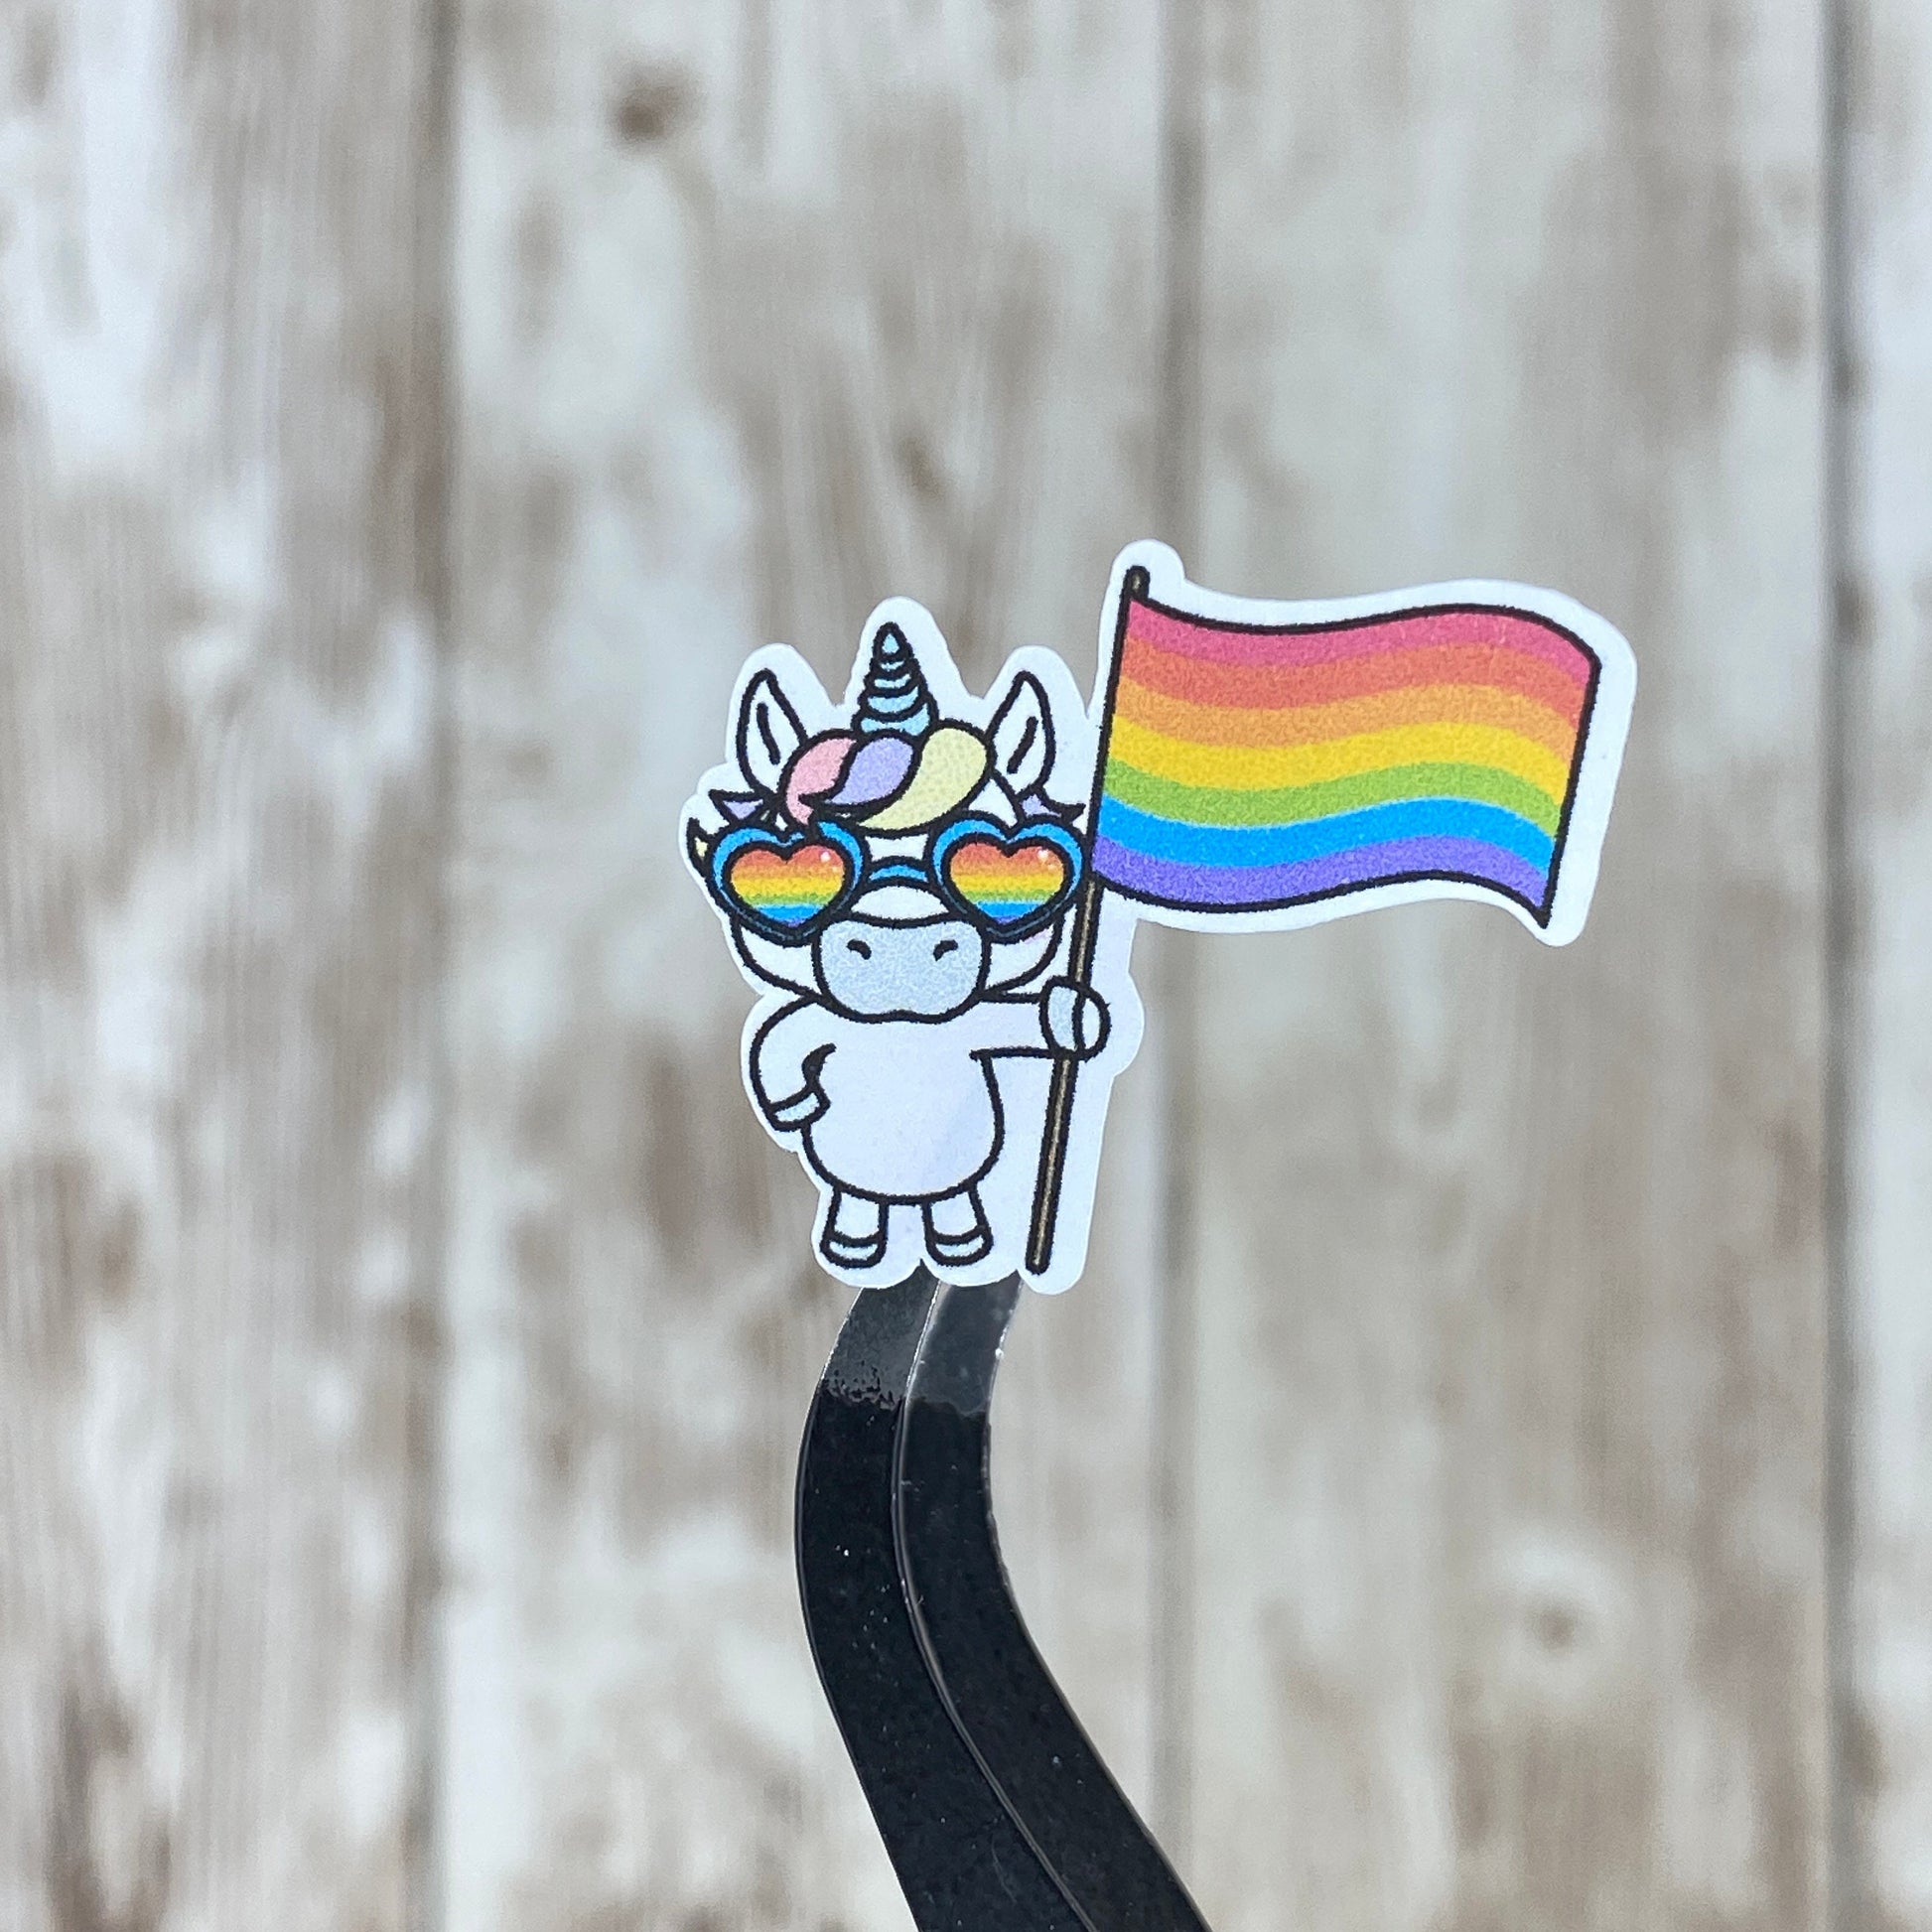 Unicorn Pride Planner Stickers for Agendas or Journals